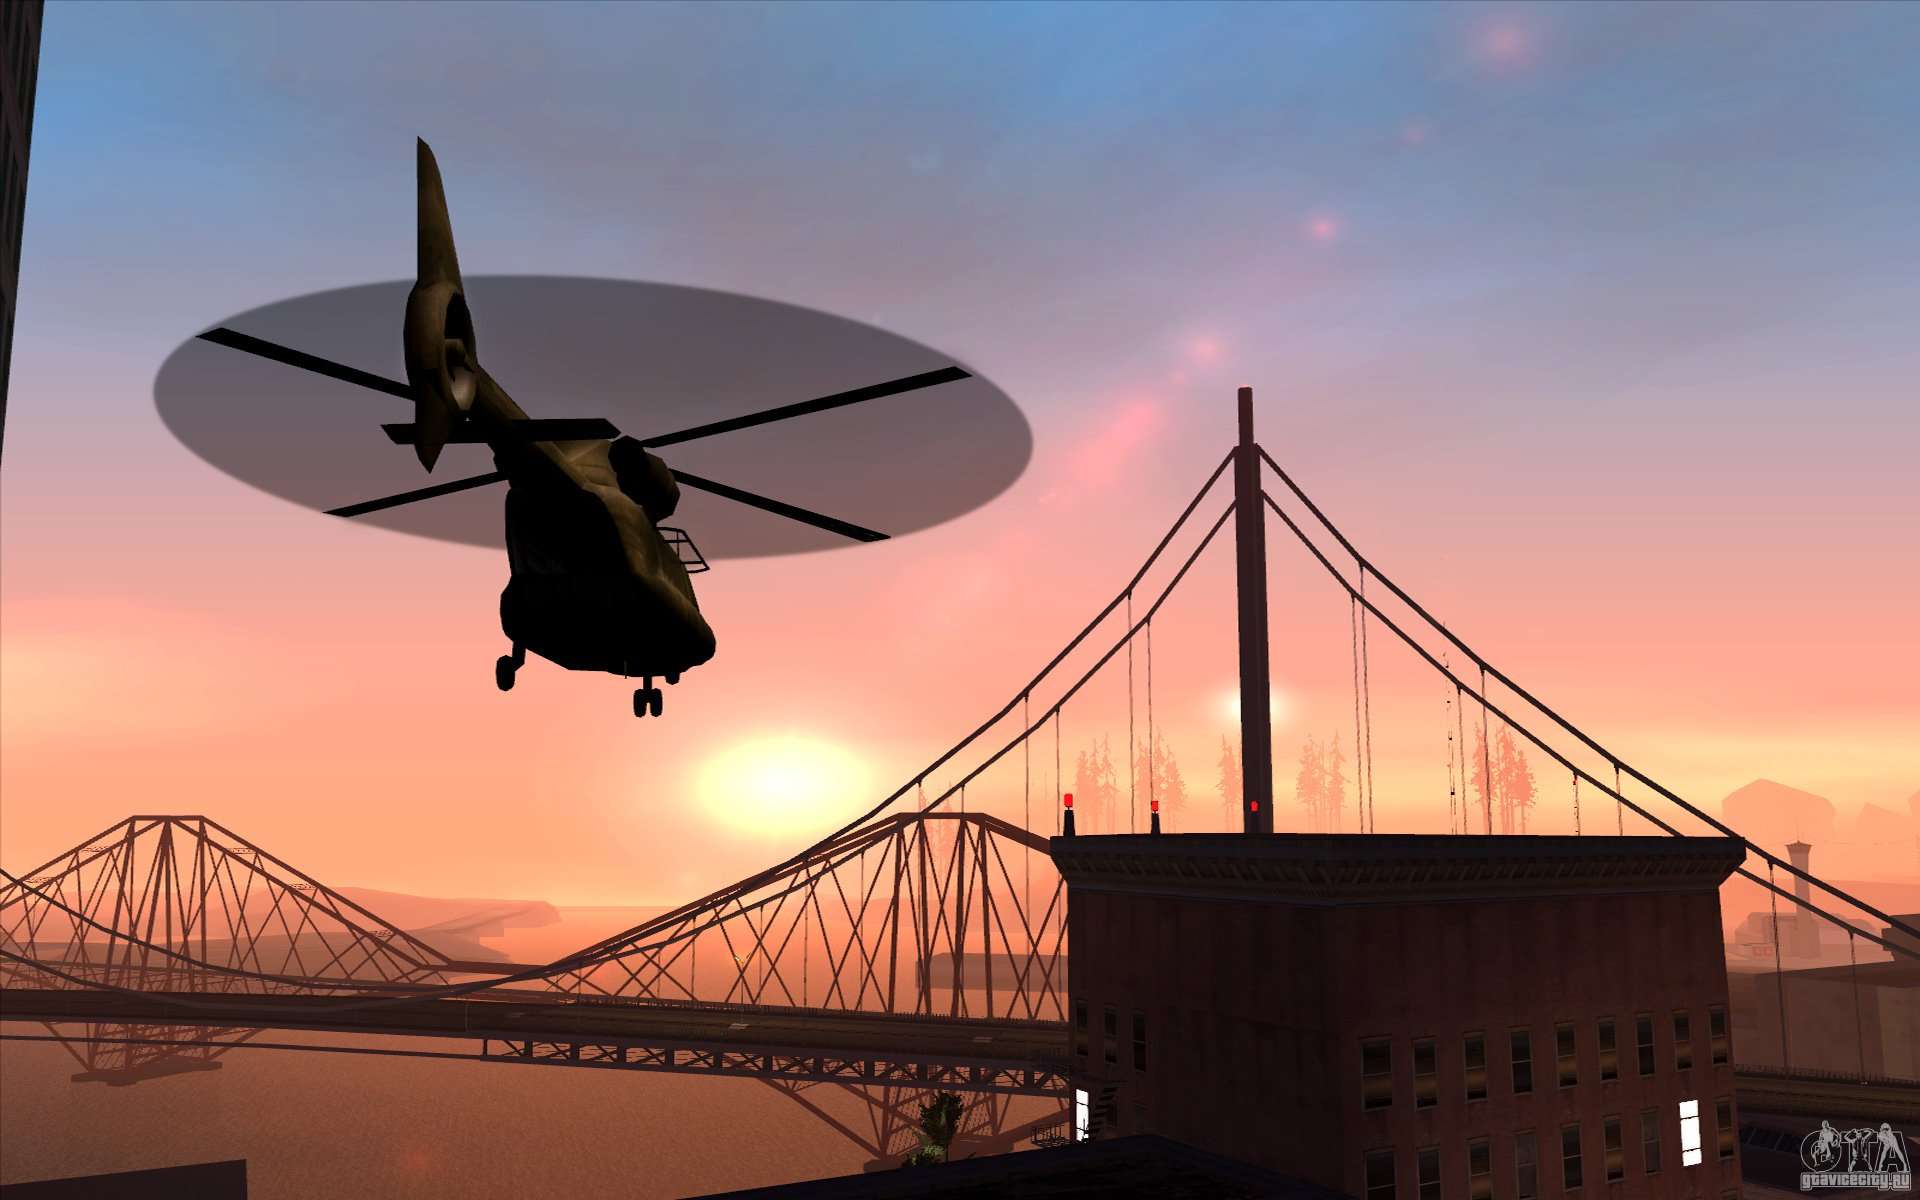 Gta san andres. Grand Theft auto: San Andreas. Ветряная мельница ГТА 5. GTA San Andreas screenshot. Картинки ГТА Сан андреас.